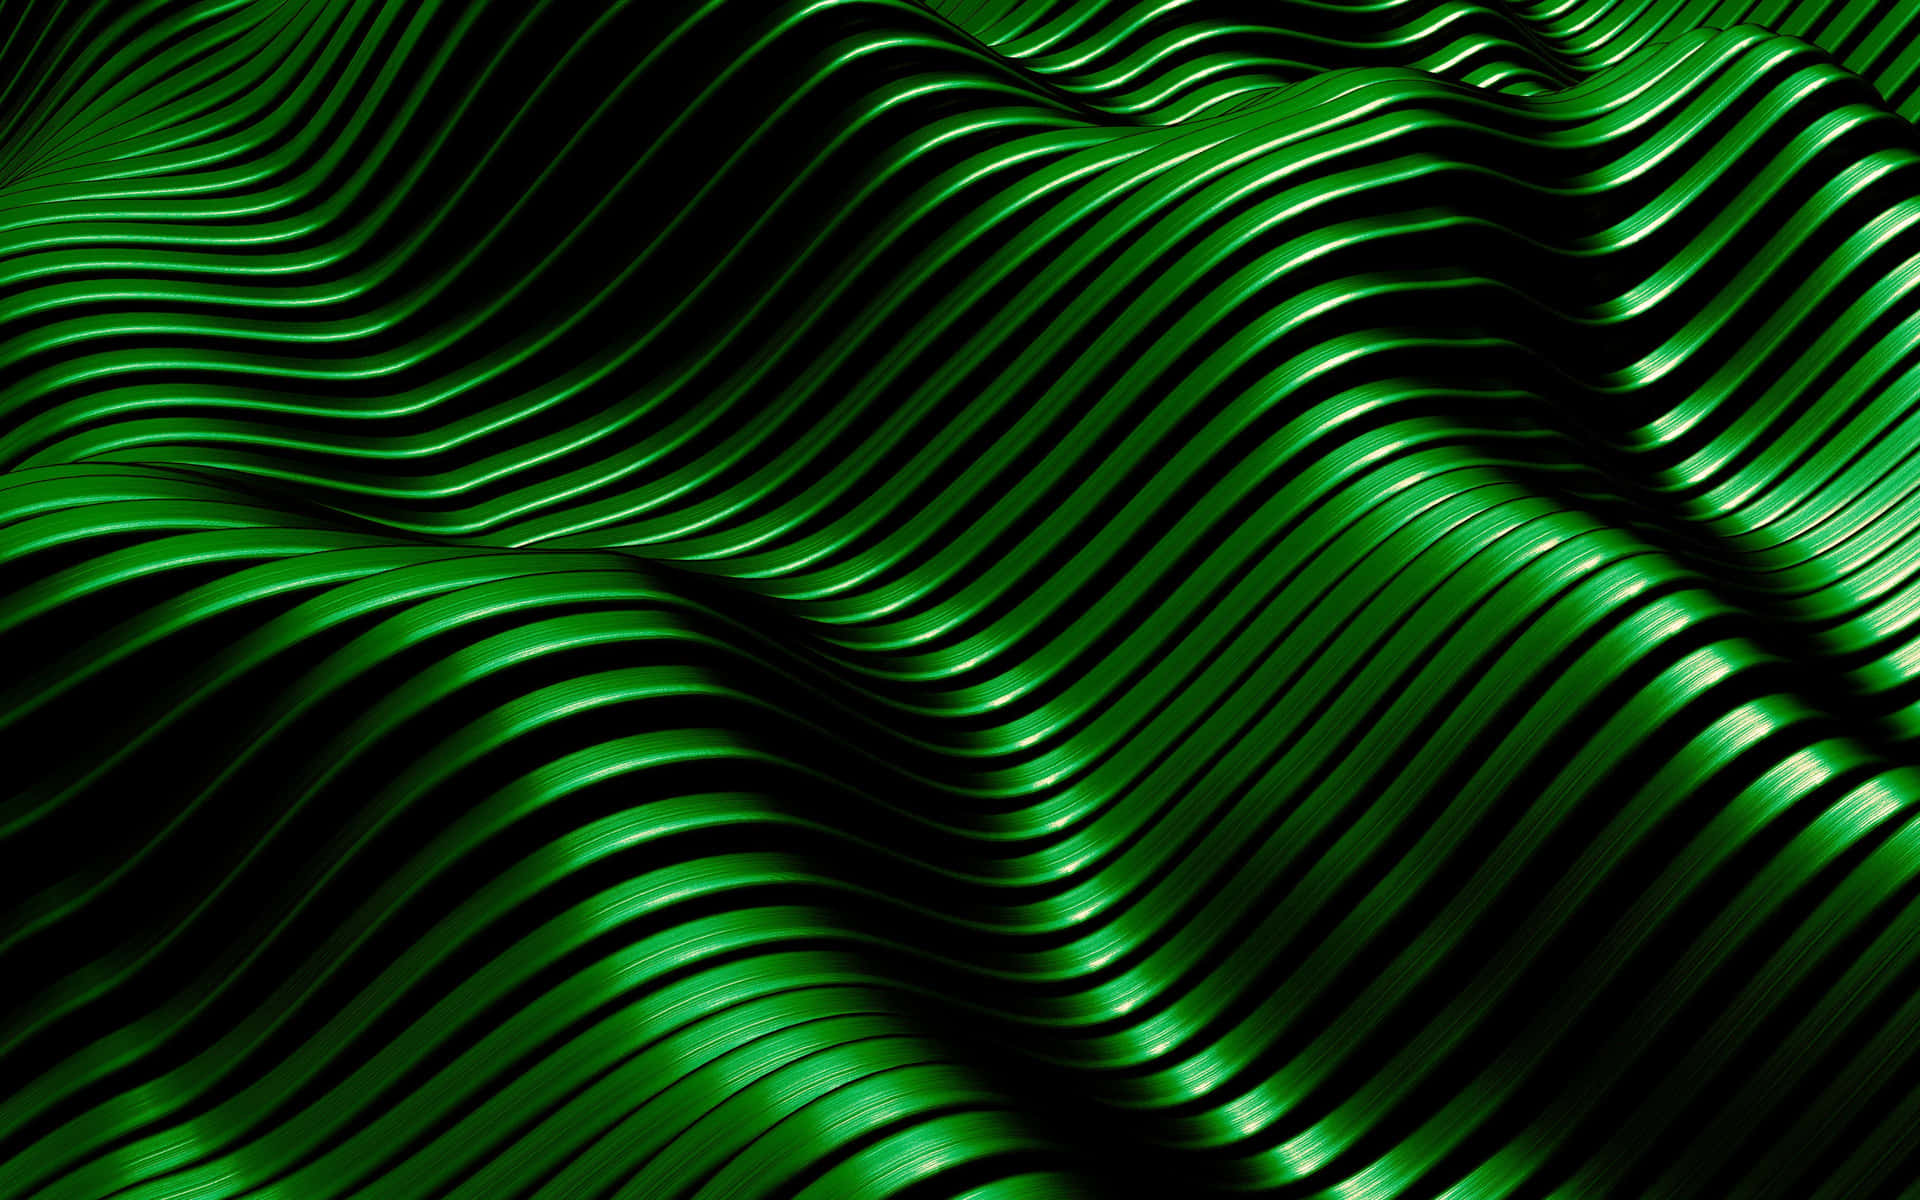 Artistic Green Metallic Wave Texture Background